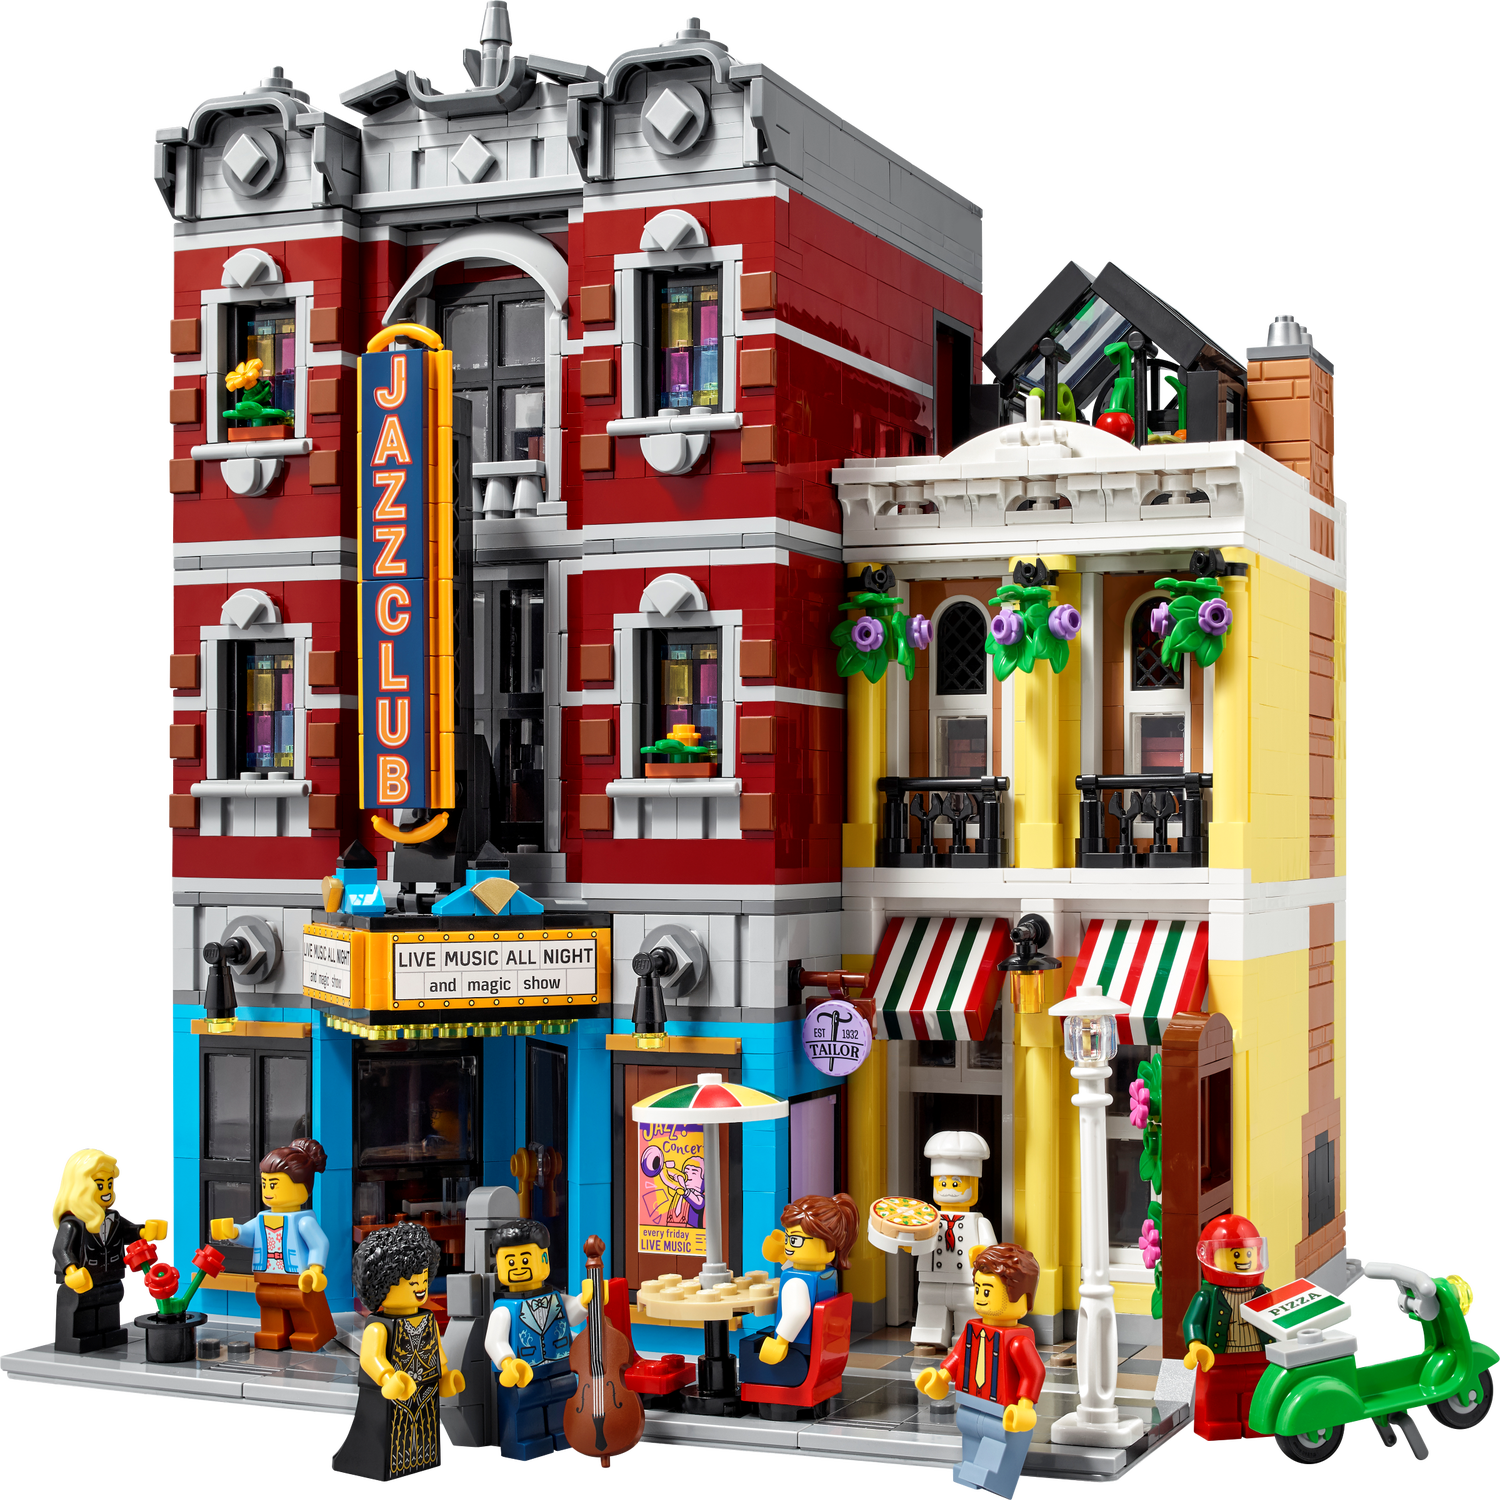 Jazzklub 10312 | Icons LEGO® Shop DK